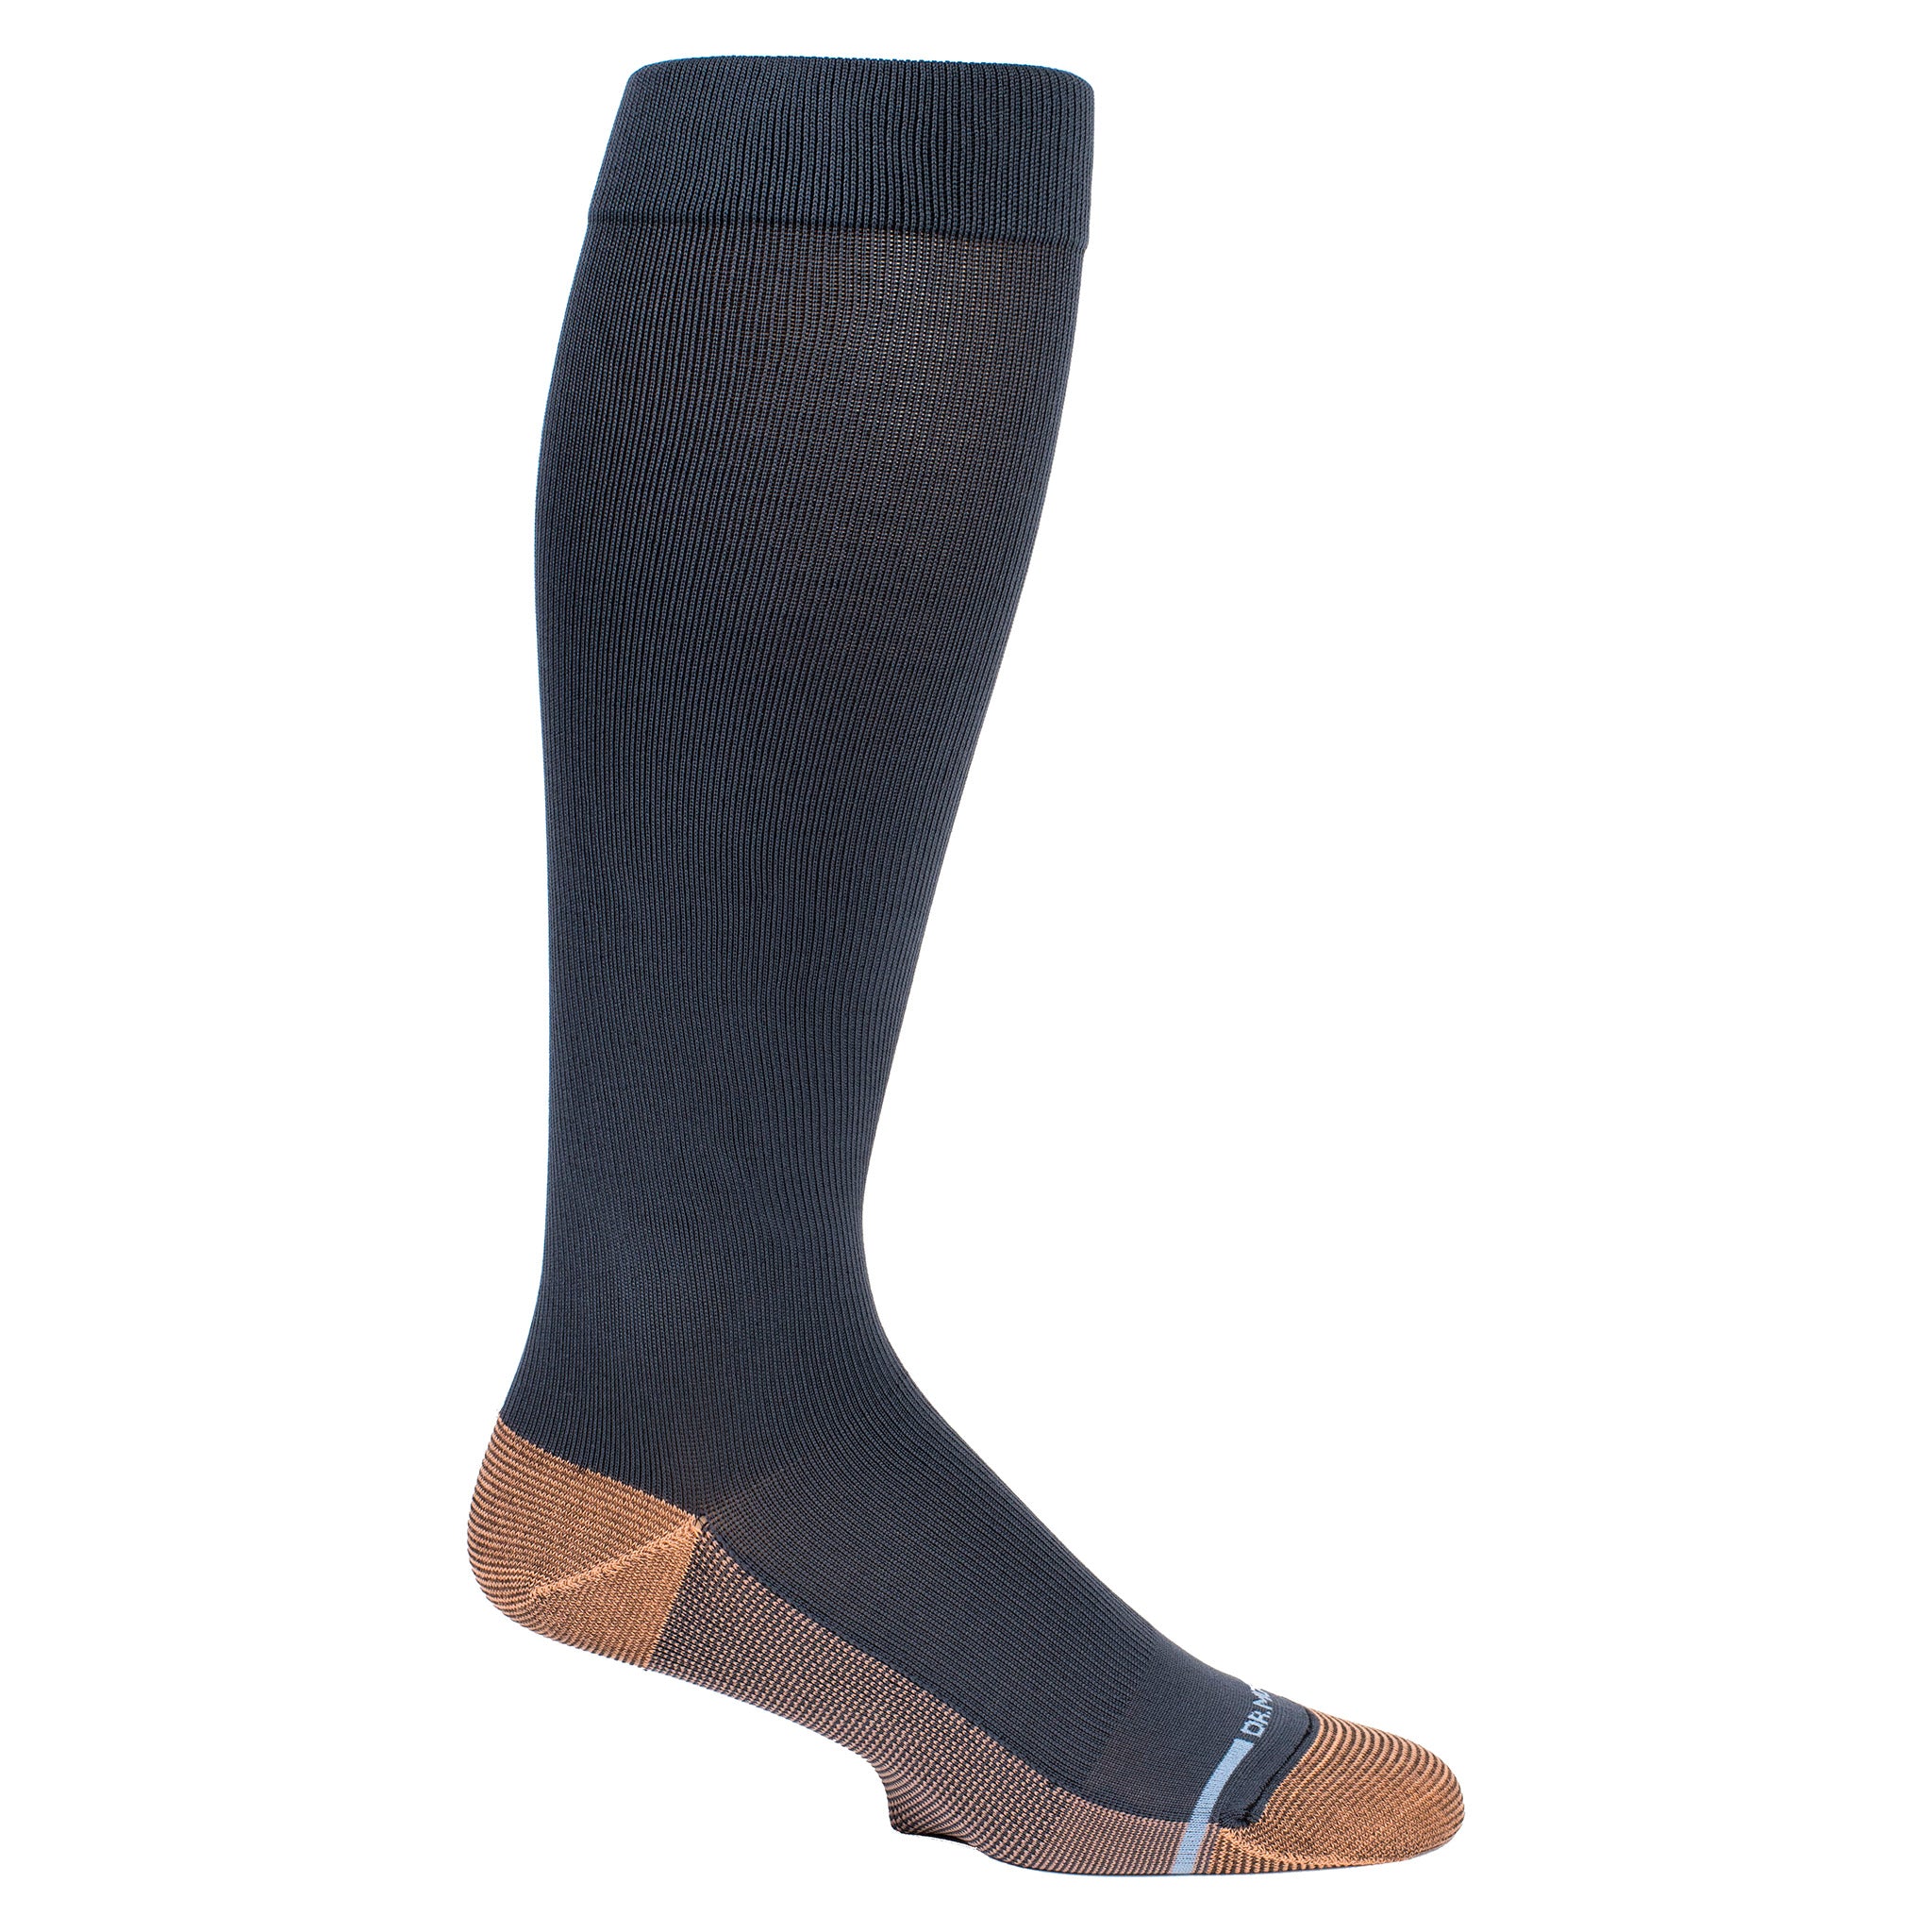 Solid Copper Infused | Knee-High Compression Socks For Men